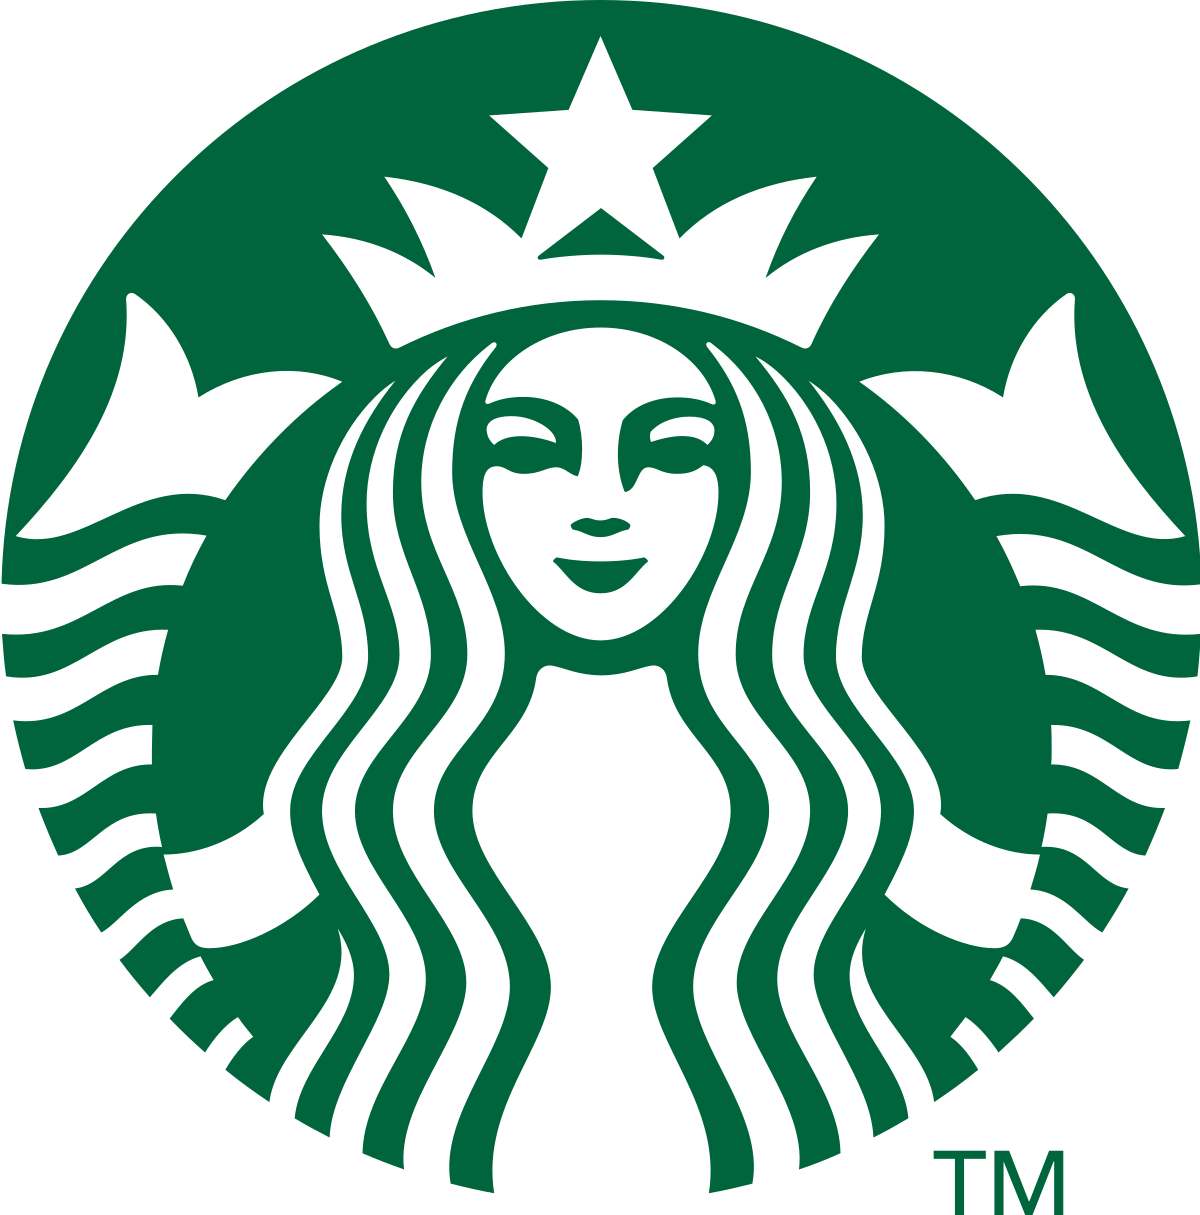 Starbucks Coffee's Image